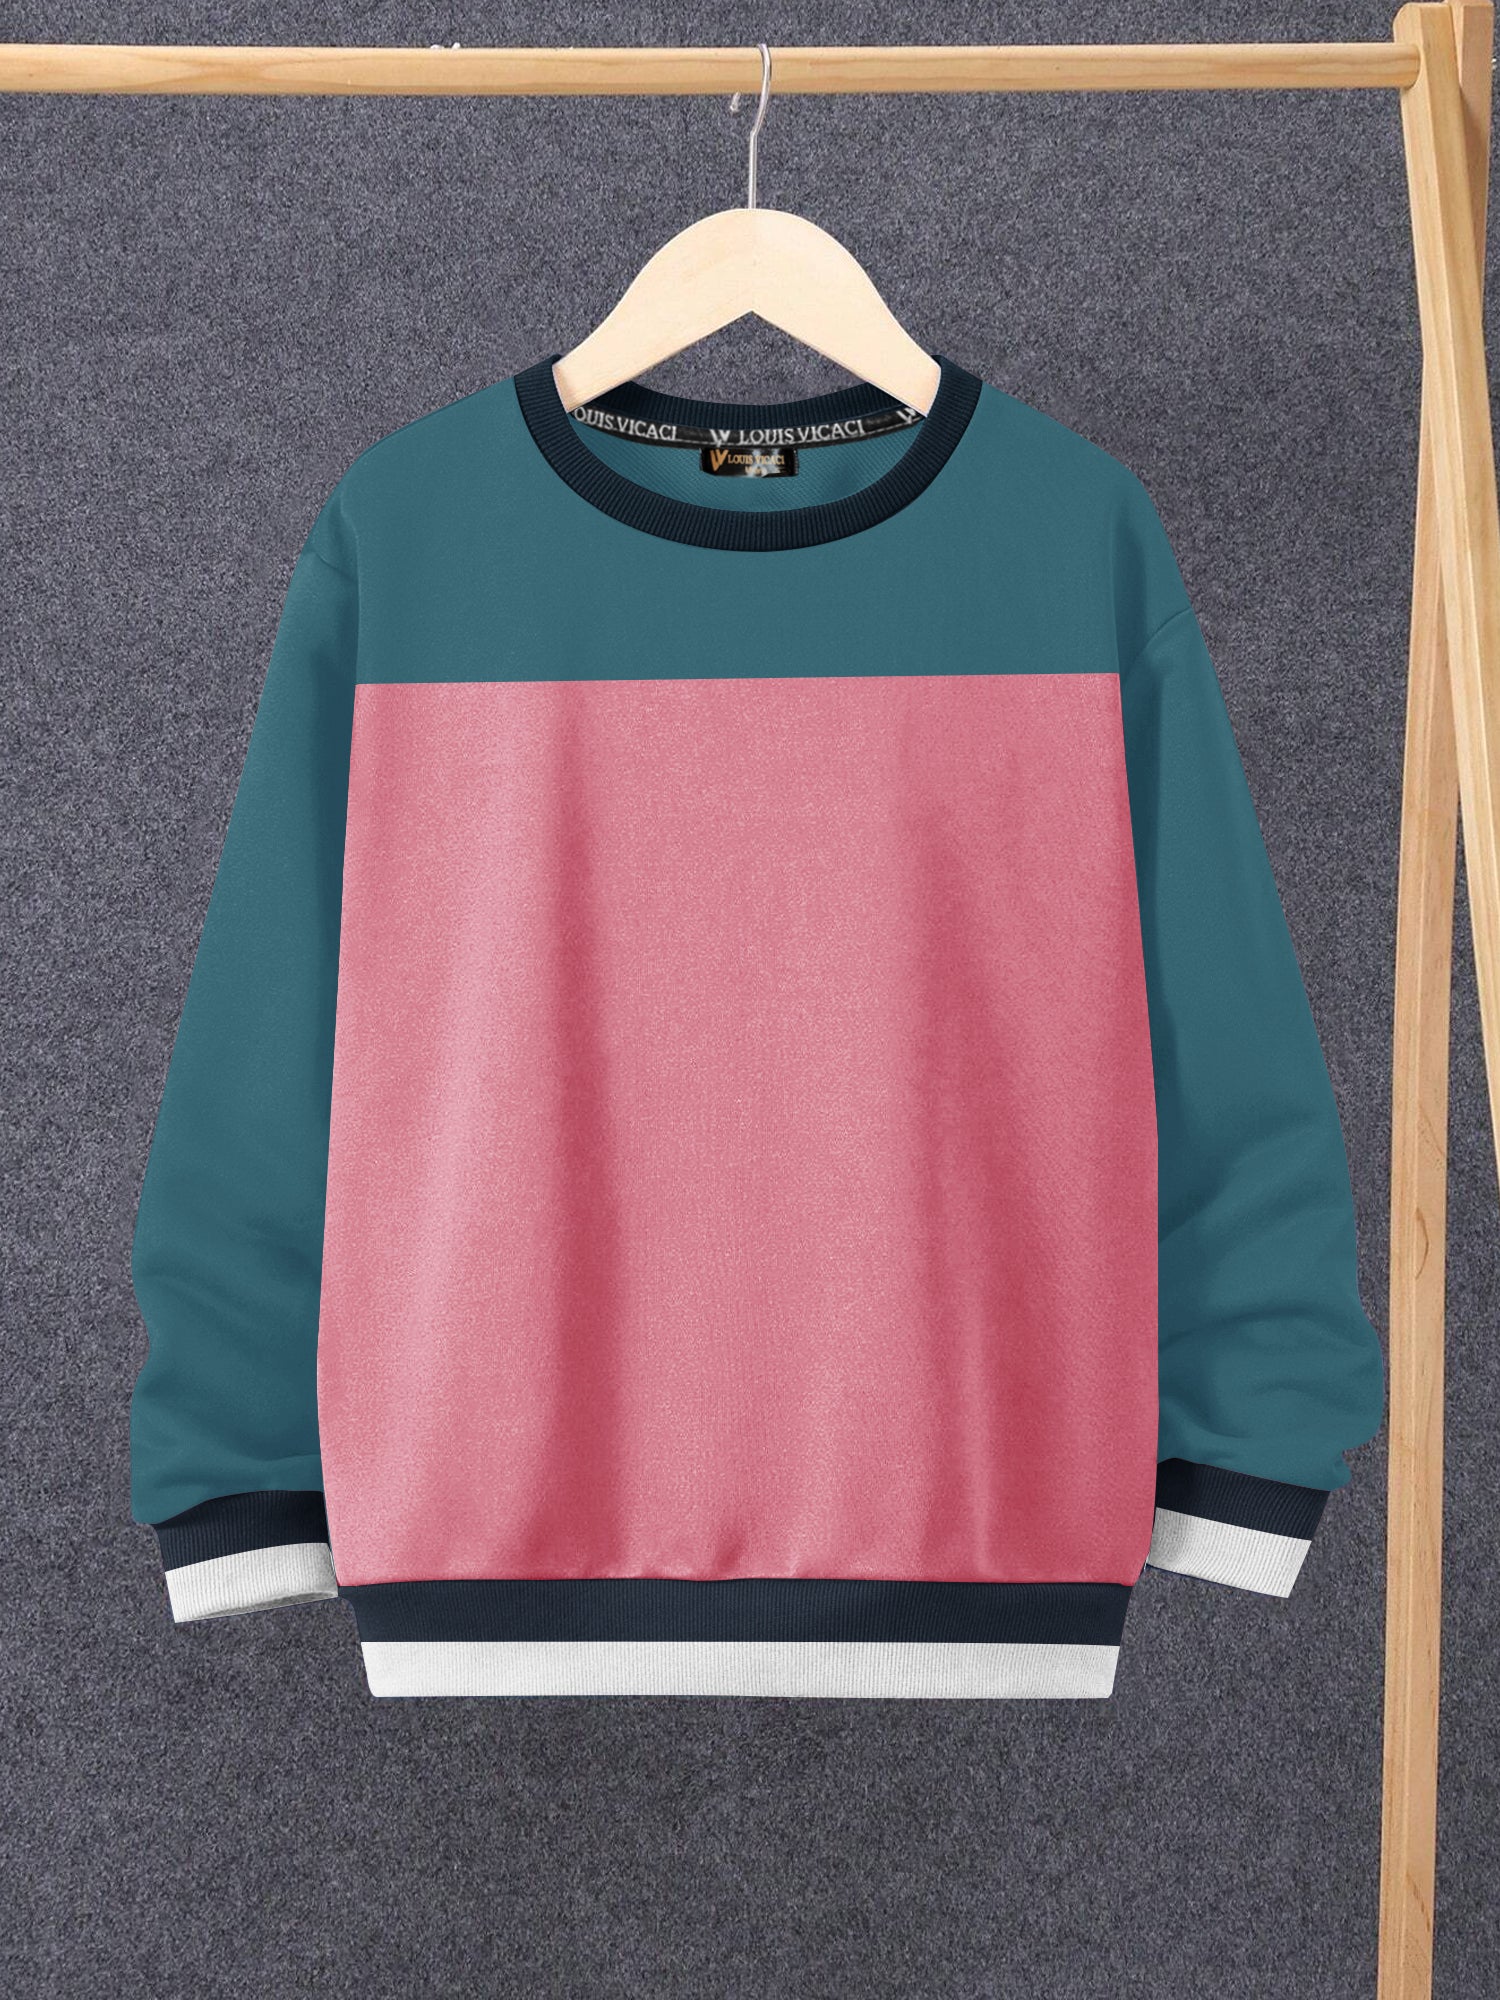 Louis Vicaci Fleece Sweatshirt For Kids-Pink Melange & Slate Blue-SP1489/RT2349